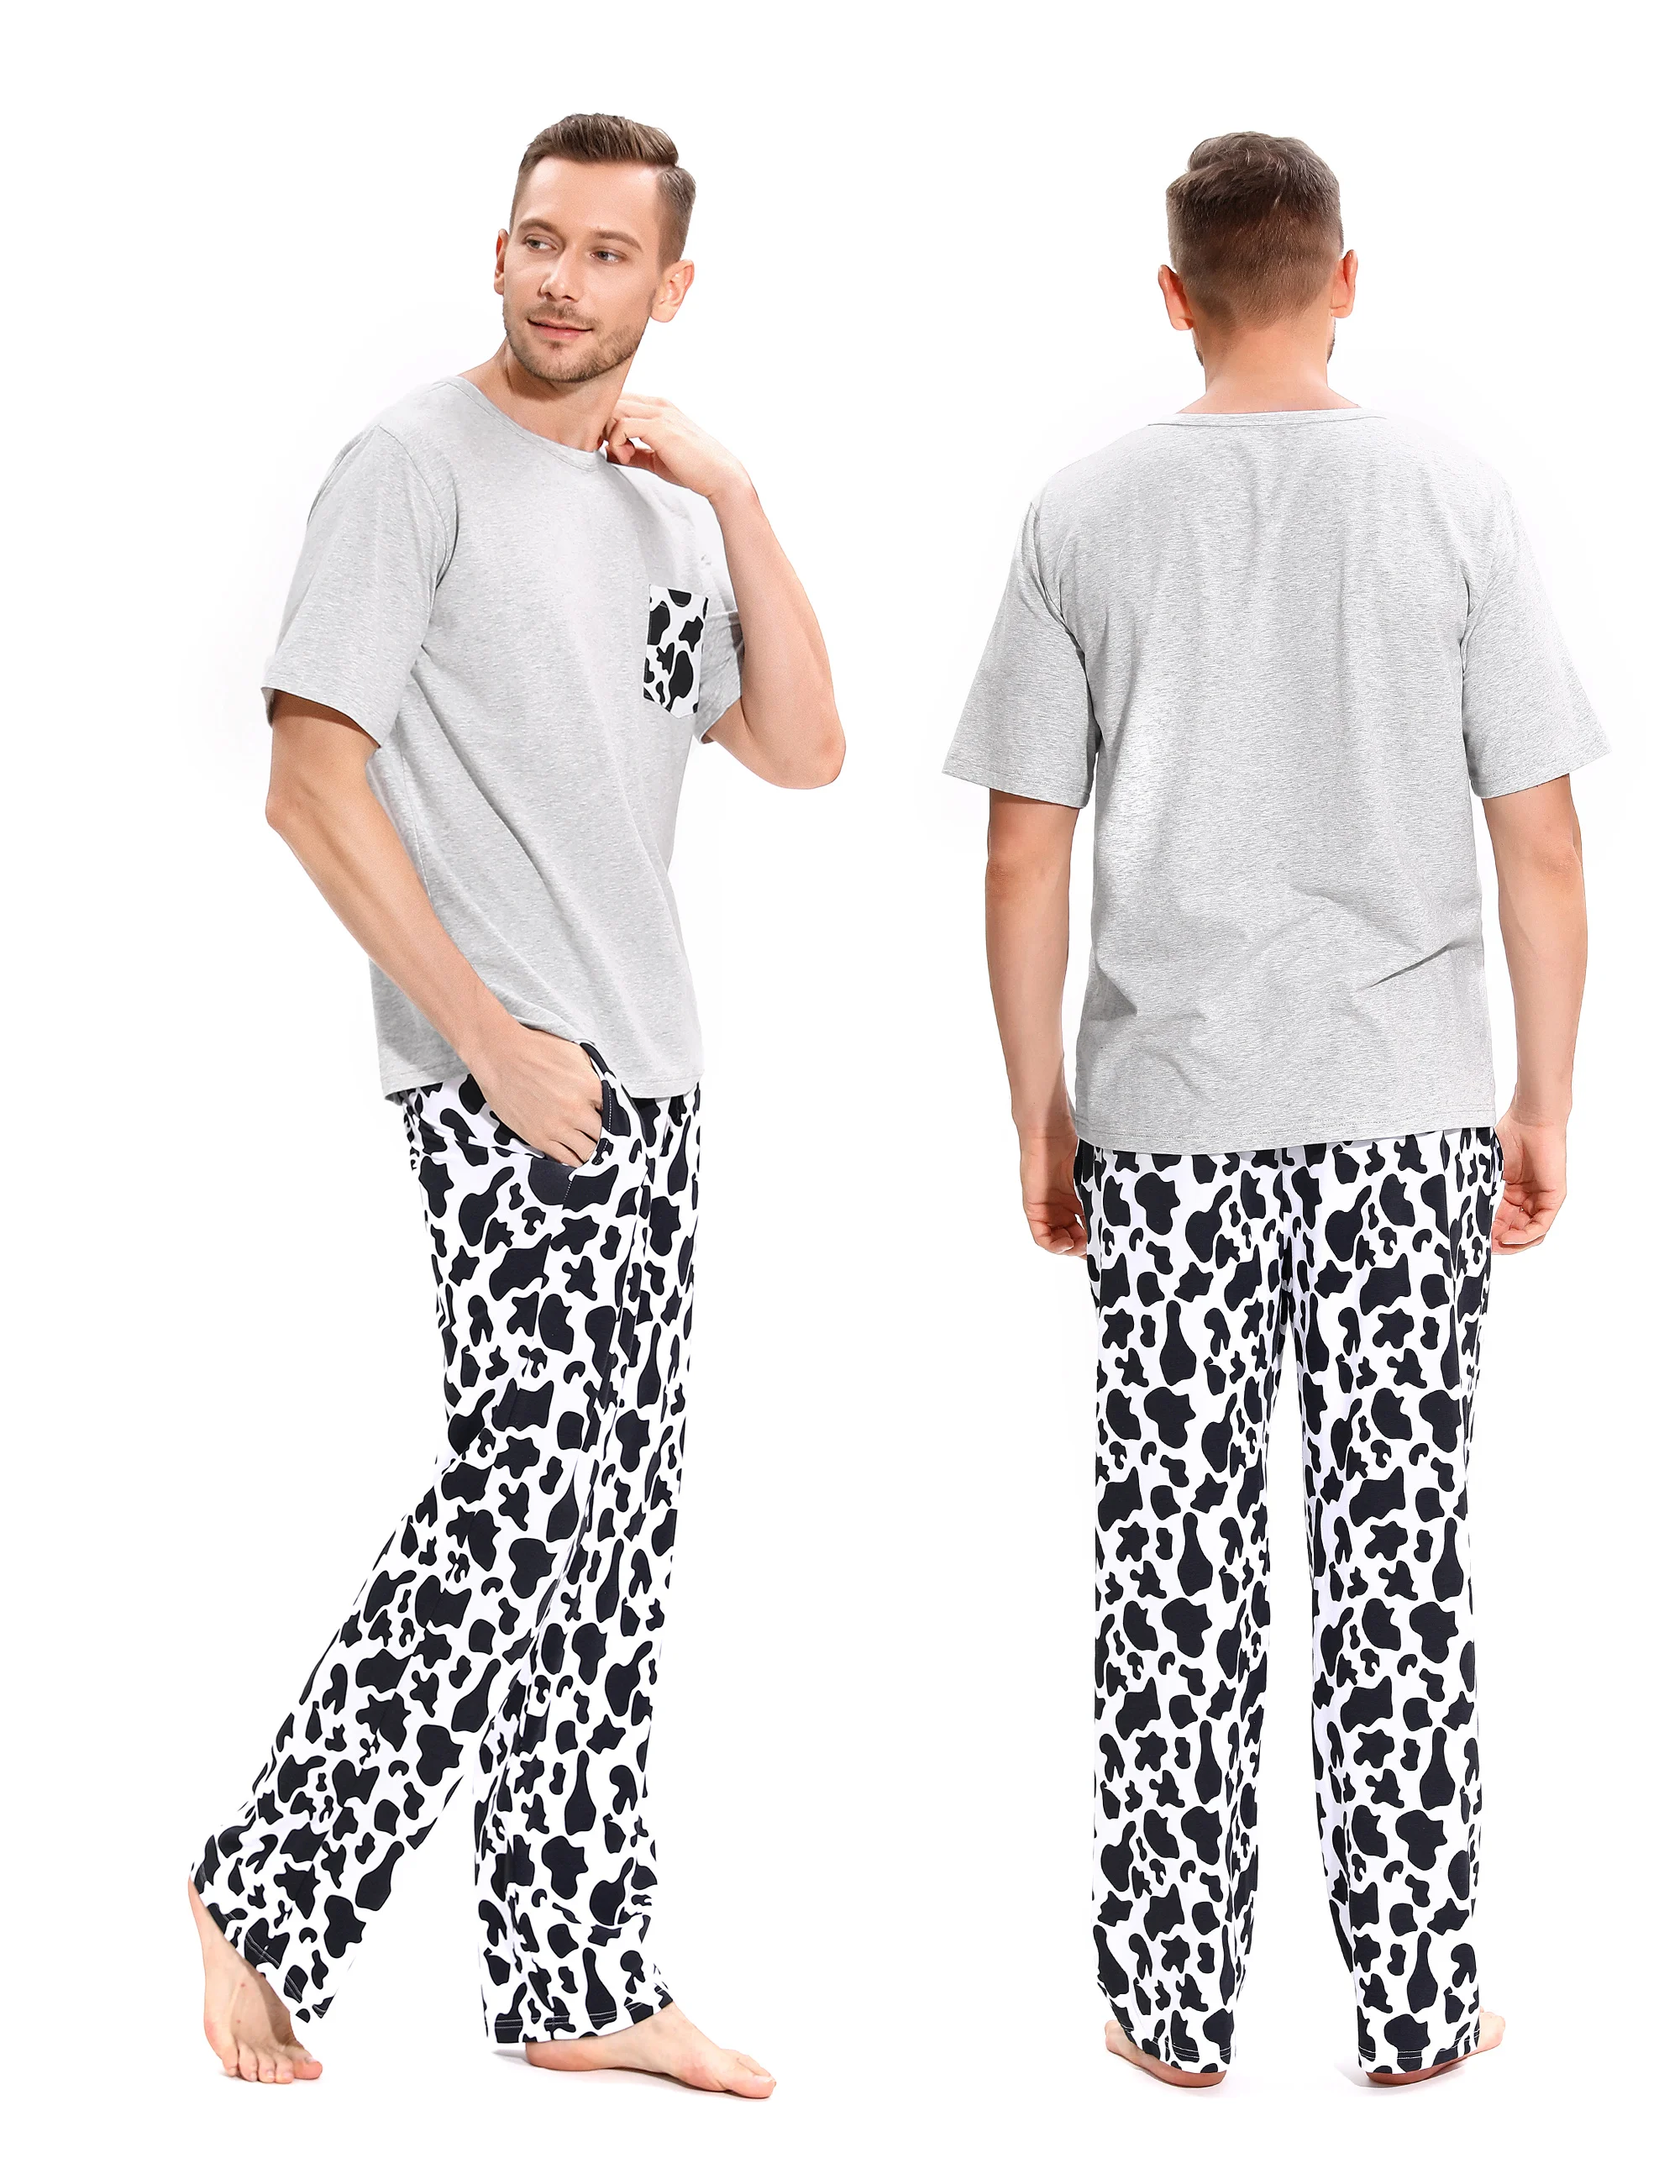 2XL L Mens Sleepwear Warm Pajamas Two-Piece Knitted Night Suit Set